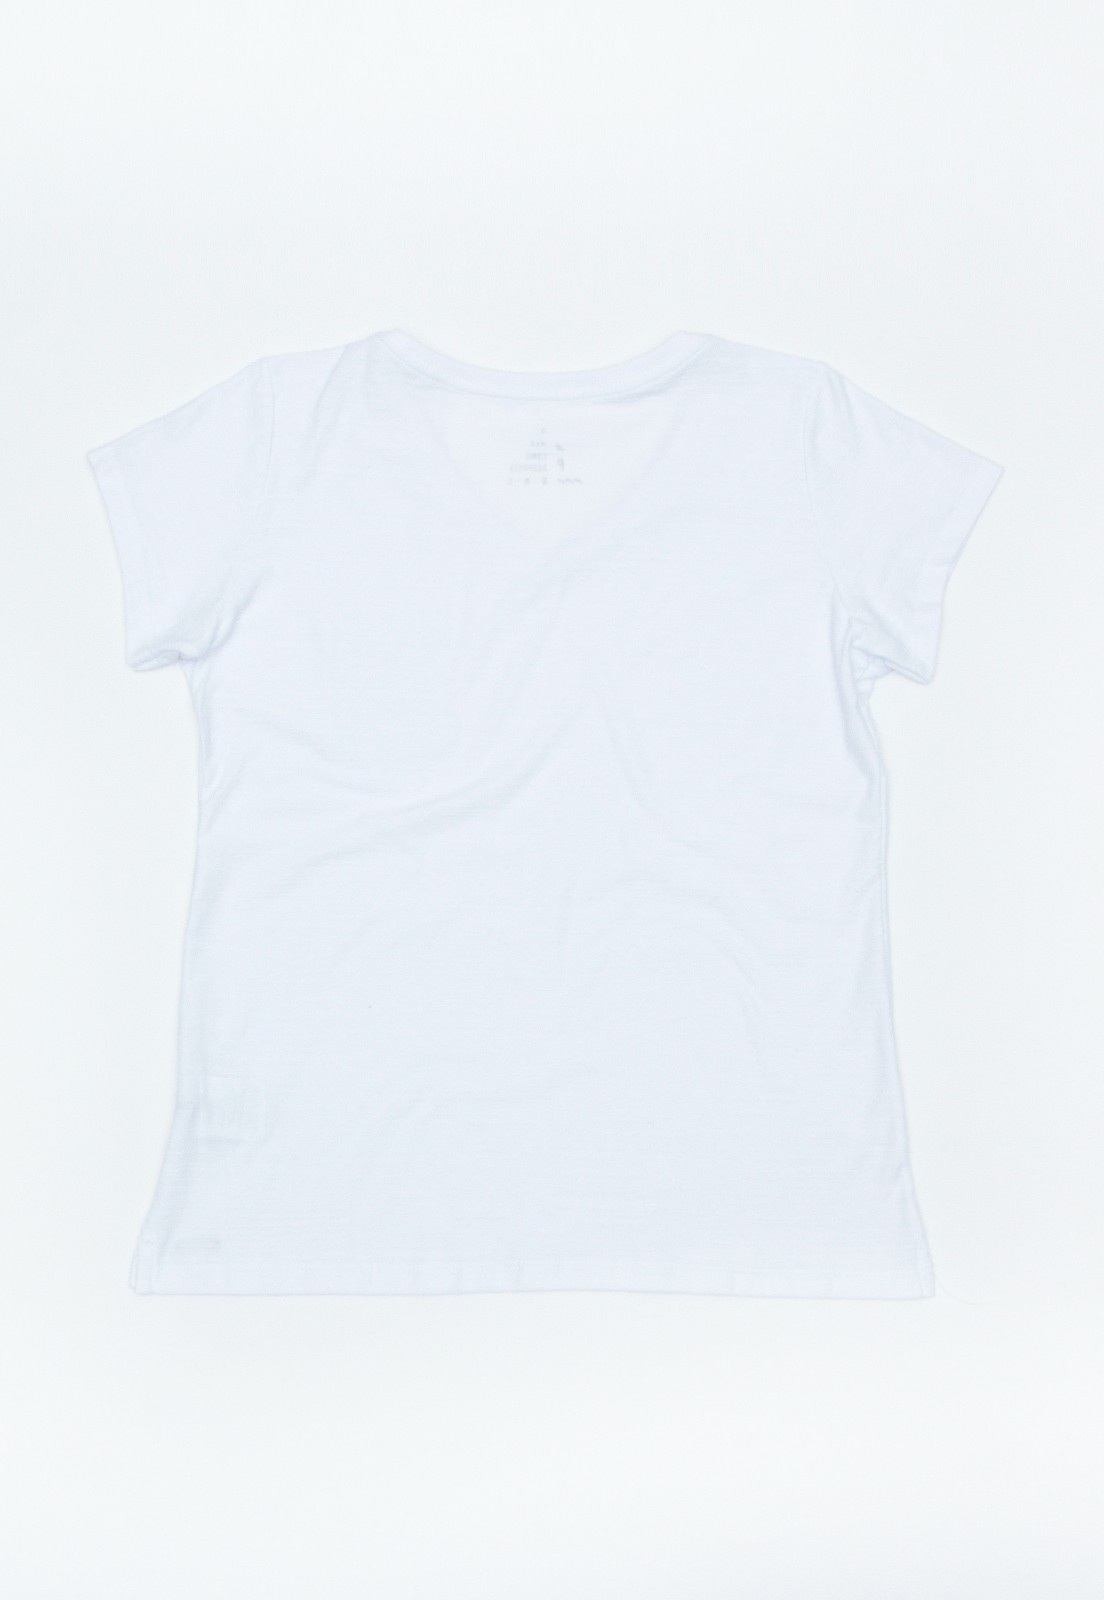 Camiseta Feminina Eco Basic Branca